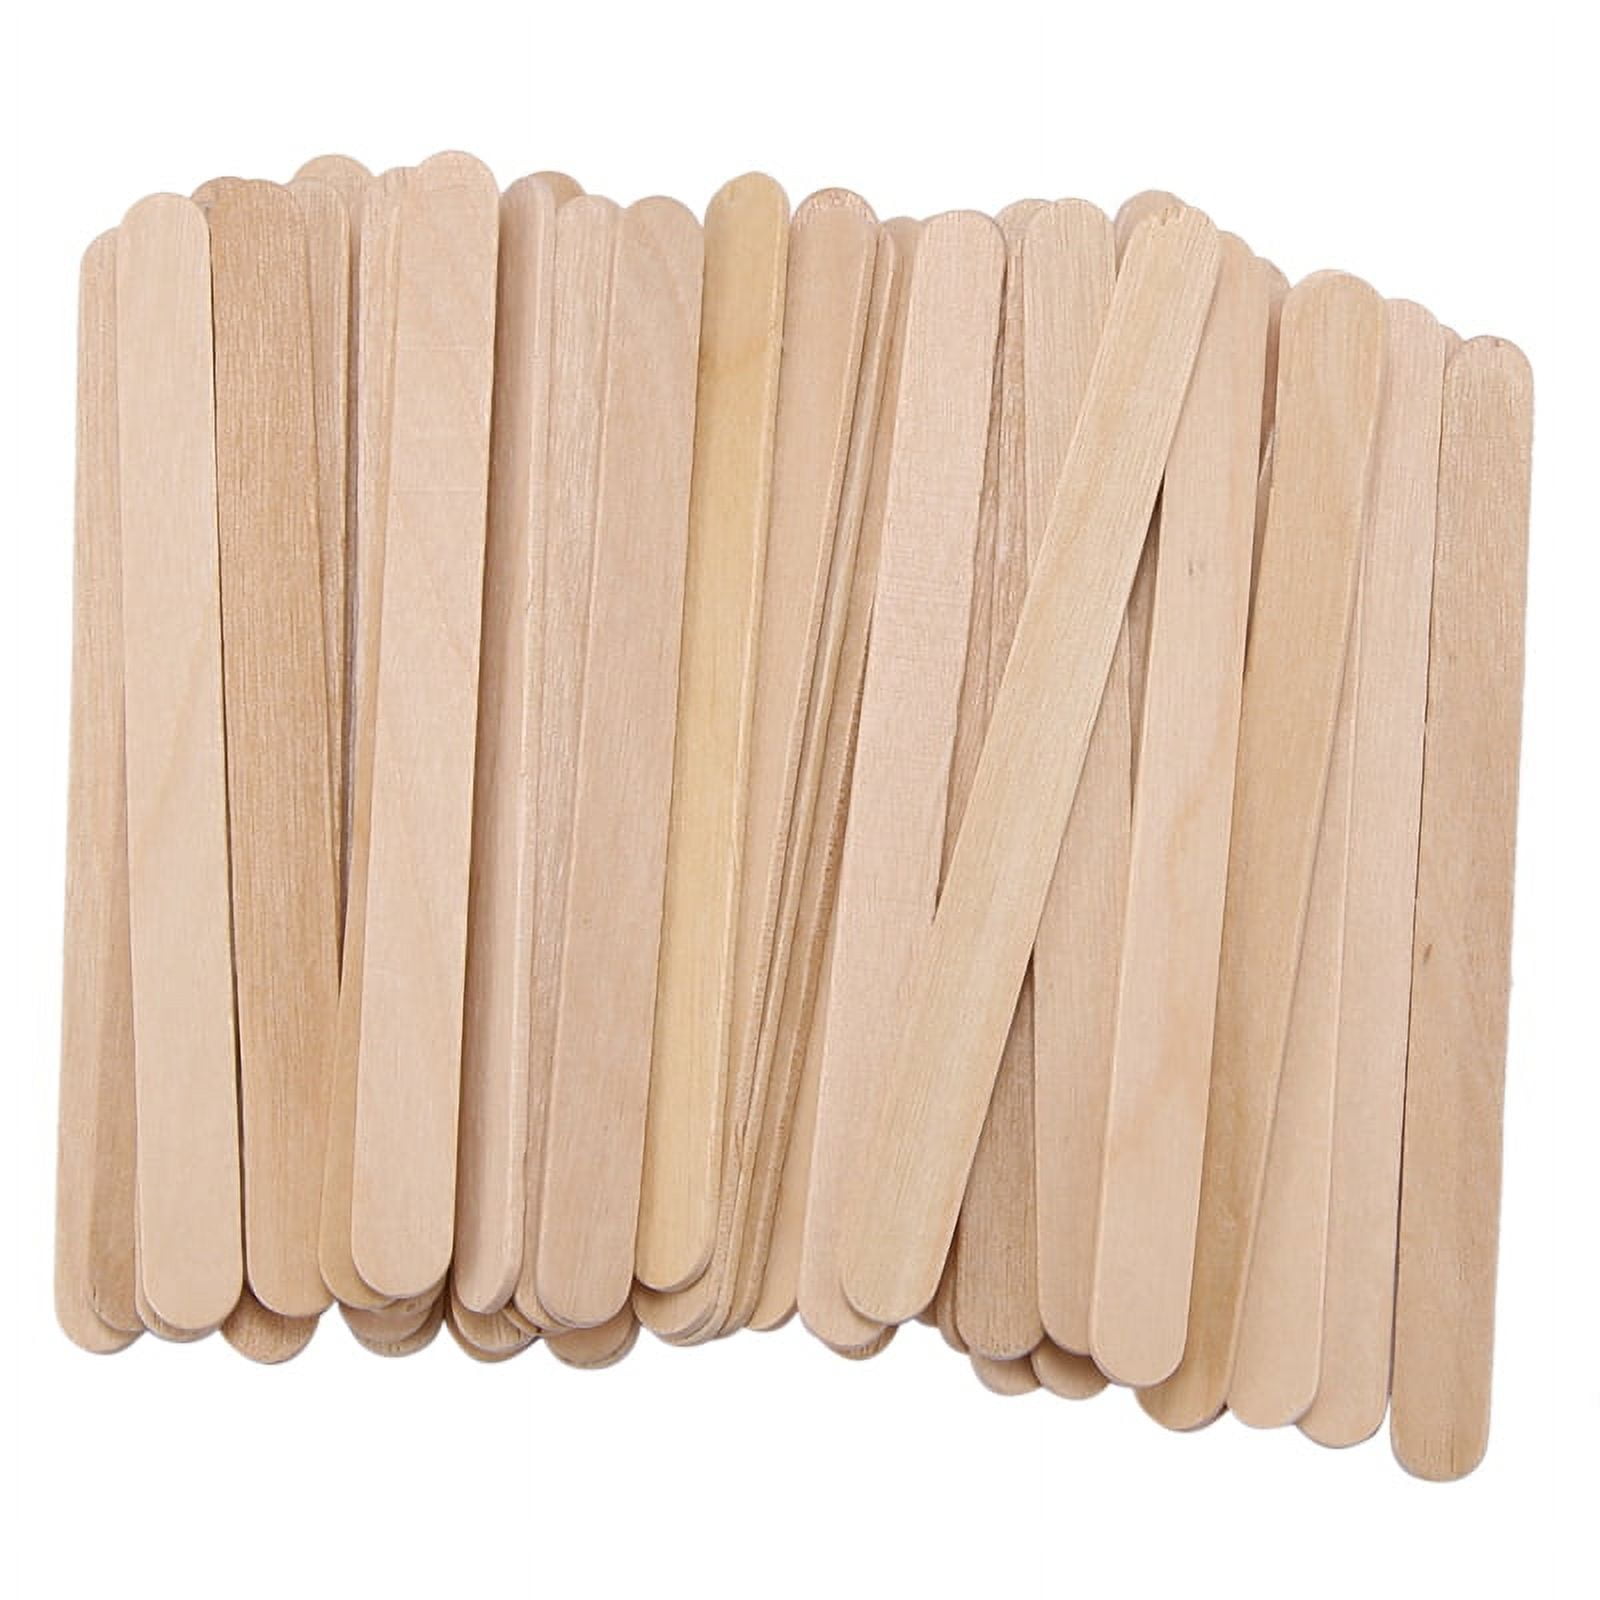 [500 Pack] Kraft Wooden Craft Sticks - Great for Arts and Crafts, Natural Wooden Treat Sticks, Wooden Popsicles Sticks, Ice Cream Sticks Ideal for